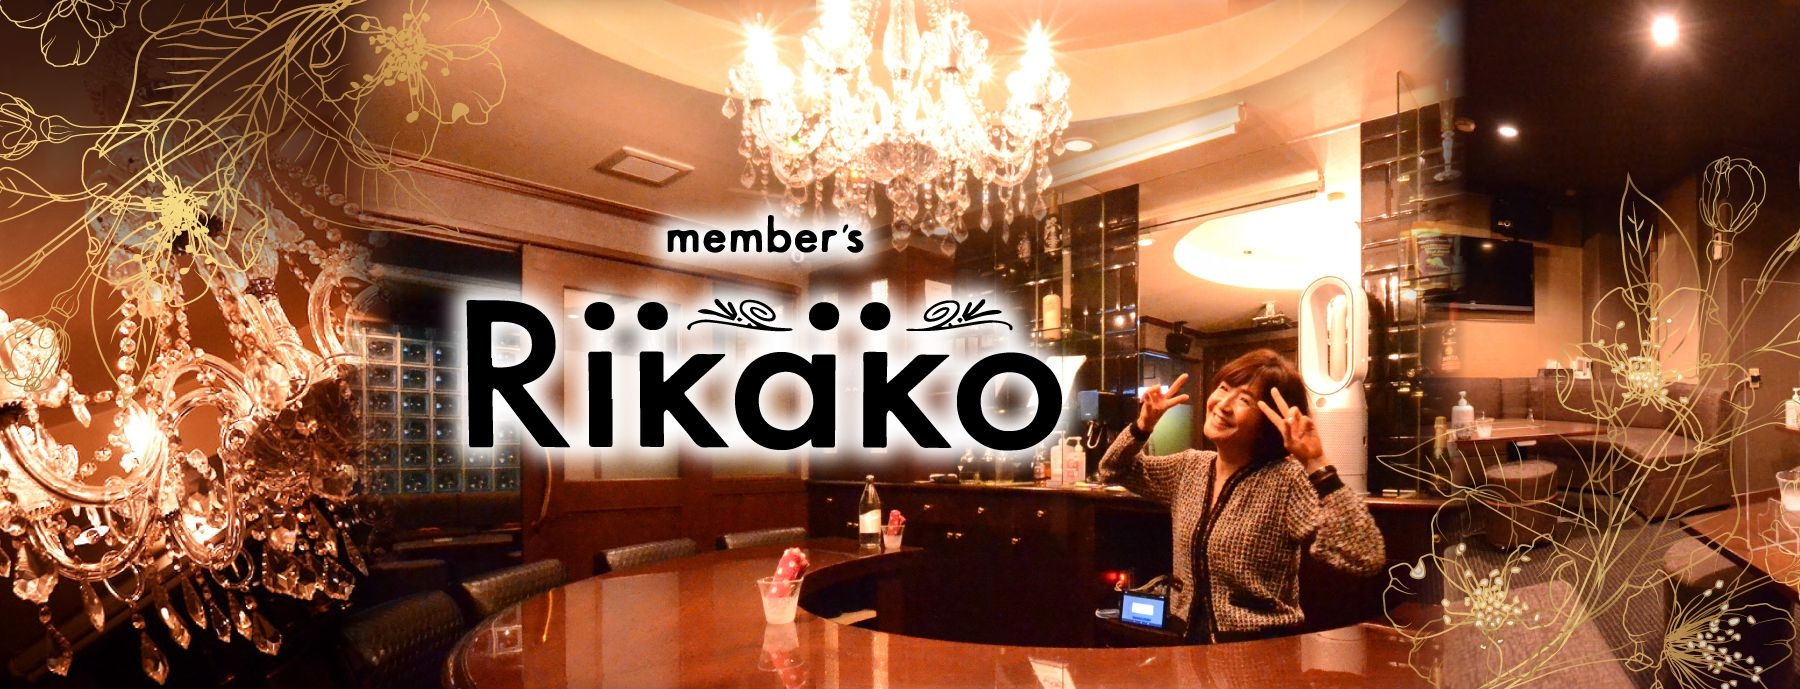 member's Rikako 〜リカコ〜